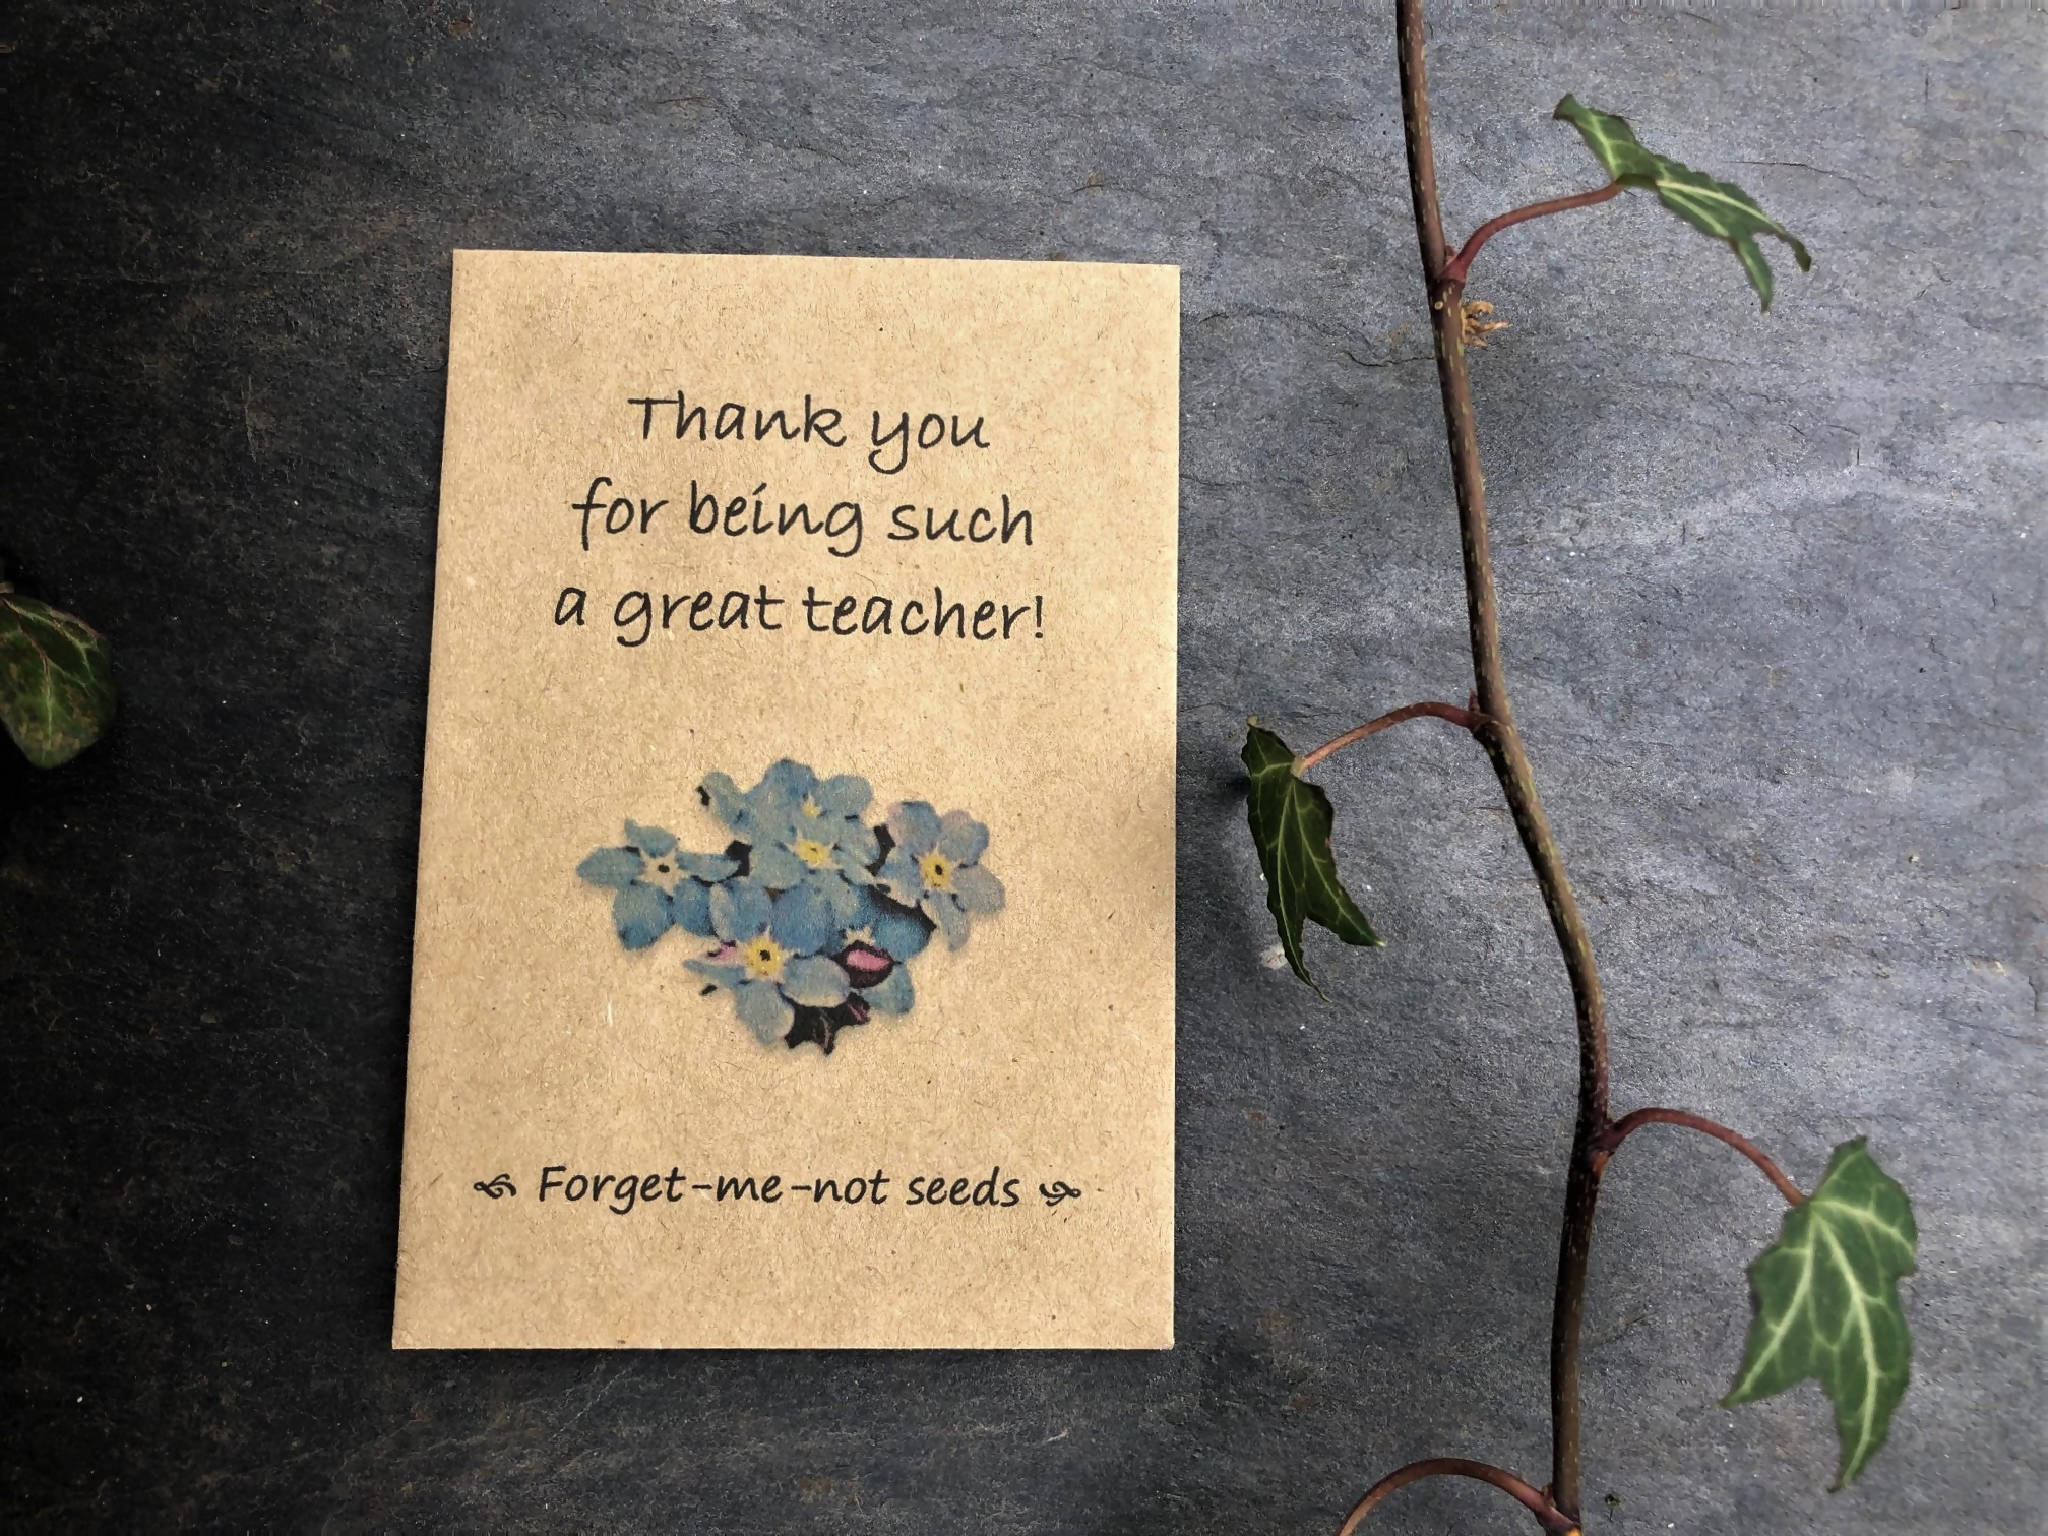 Teachers Gifts, Teachers Presents, Thank you seeds, Thank You Presents, Thank you gifts, forget-me-not seeds, wildflowers seeds, seed gifts, teachers seeds